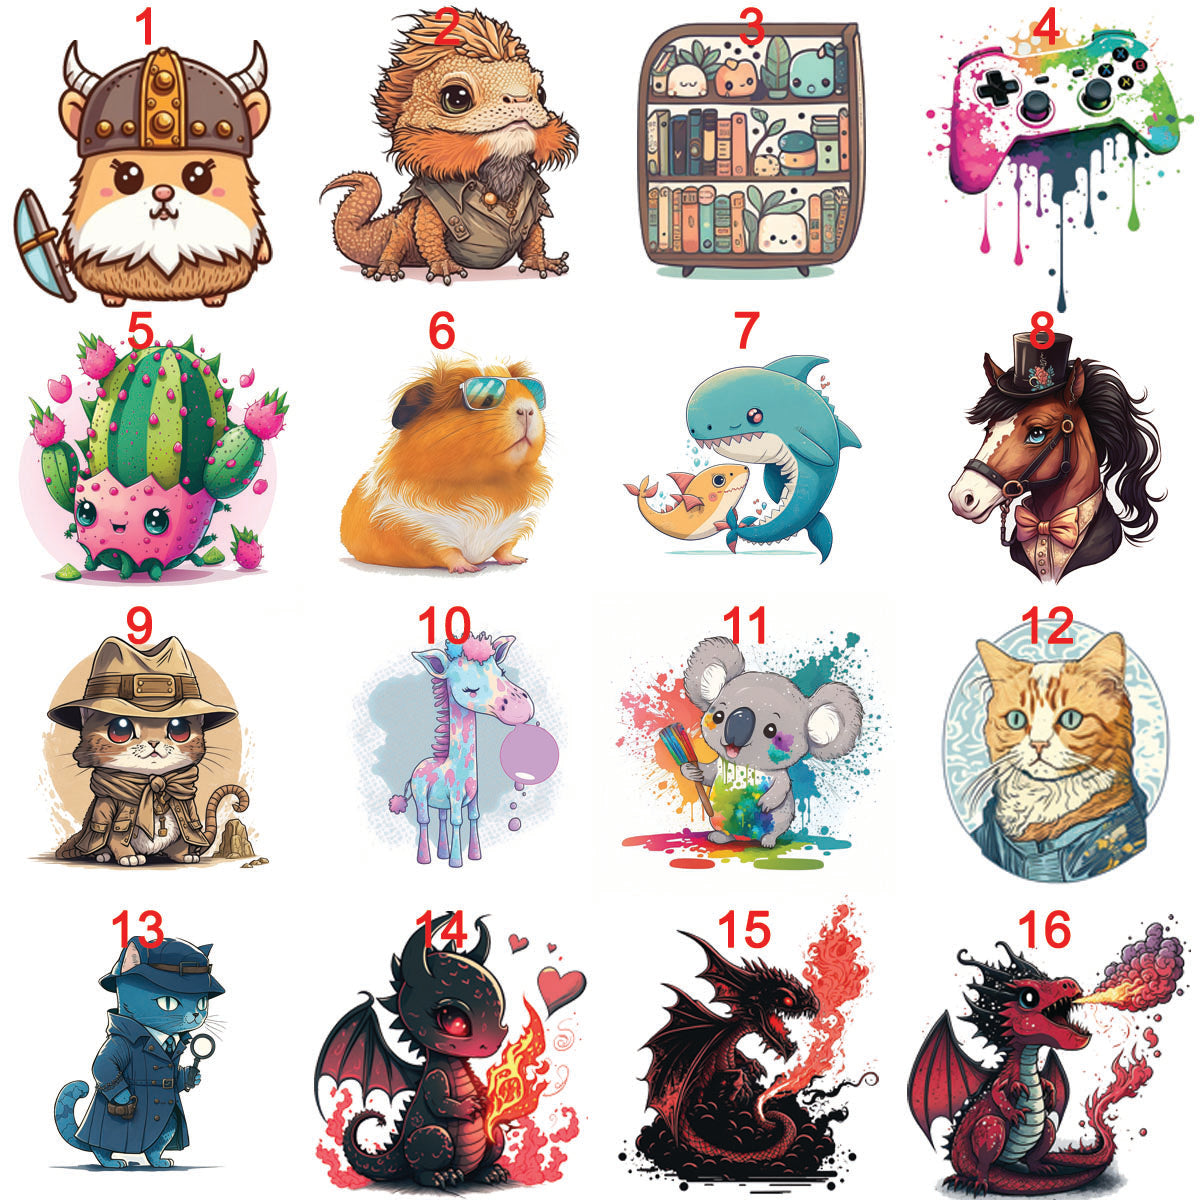 STICKERS 5- My Art Stickers, dragons, colorful, bunnies, faries, fairy, faery, magic, mythical, bear, giraffe, wearwolf, lizard, dinosaur,